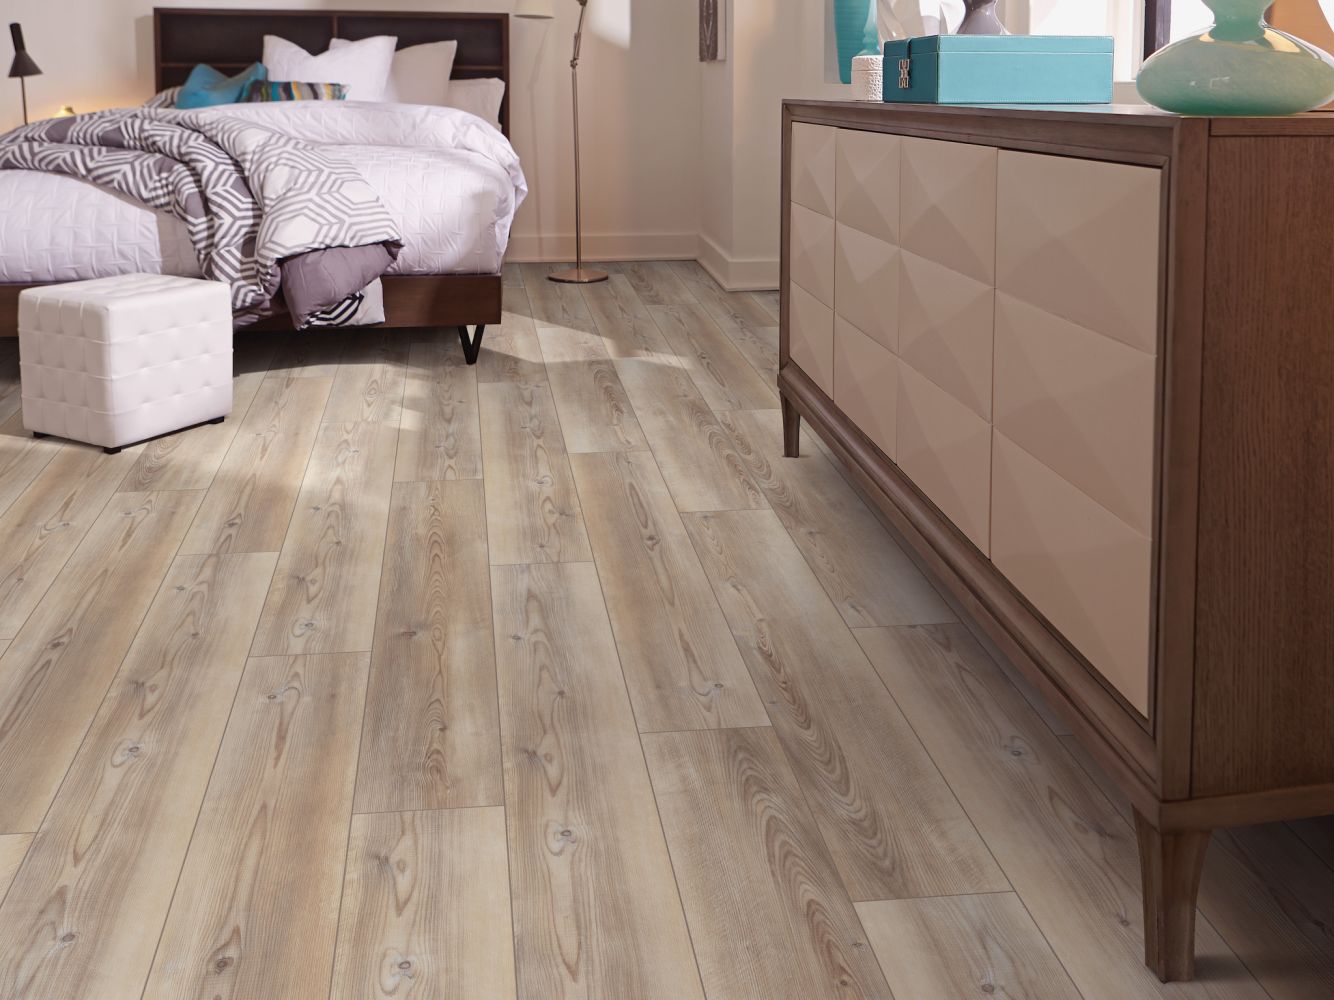 Shaw Floors Resilient Residential Paragon 7″ Plus Cut Pine 01005_1020V